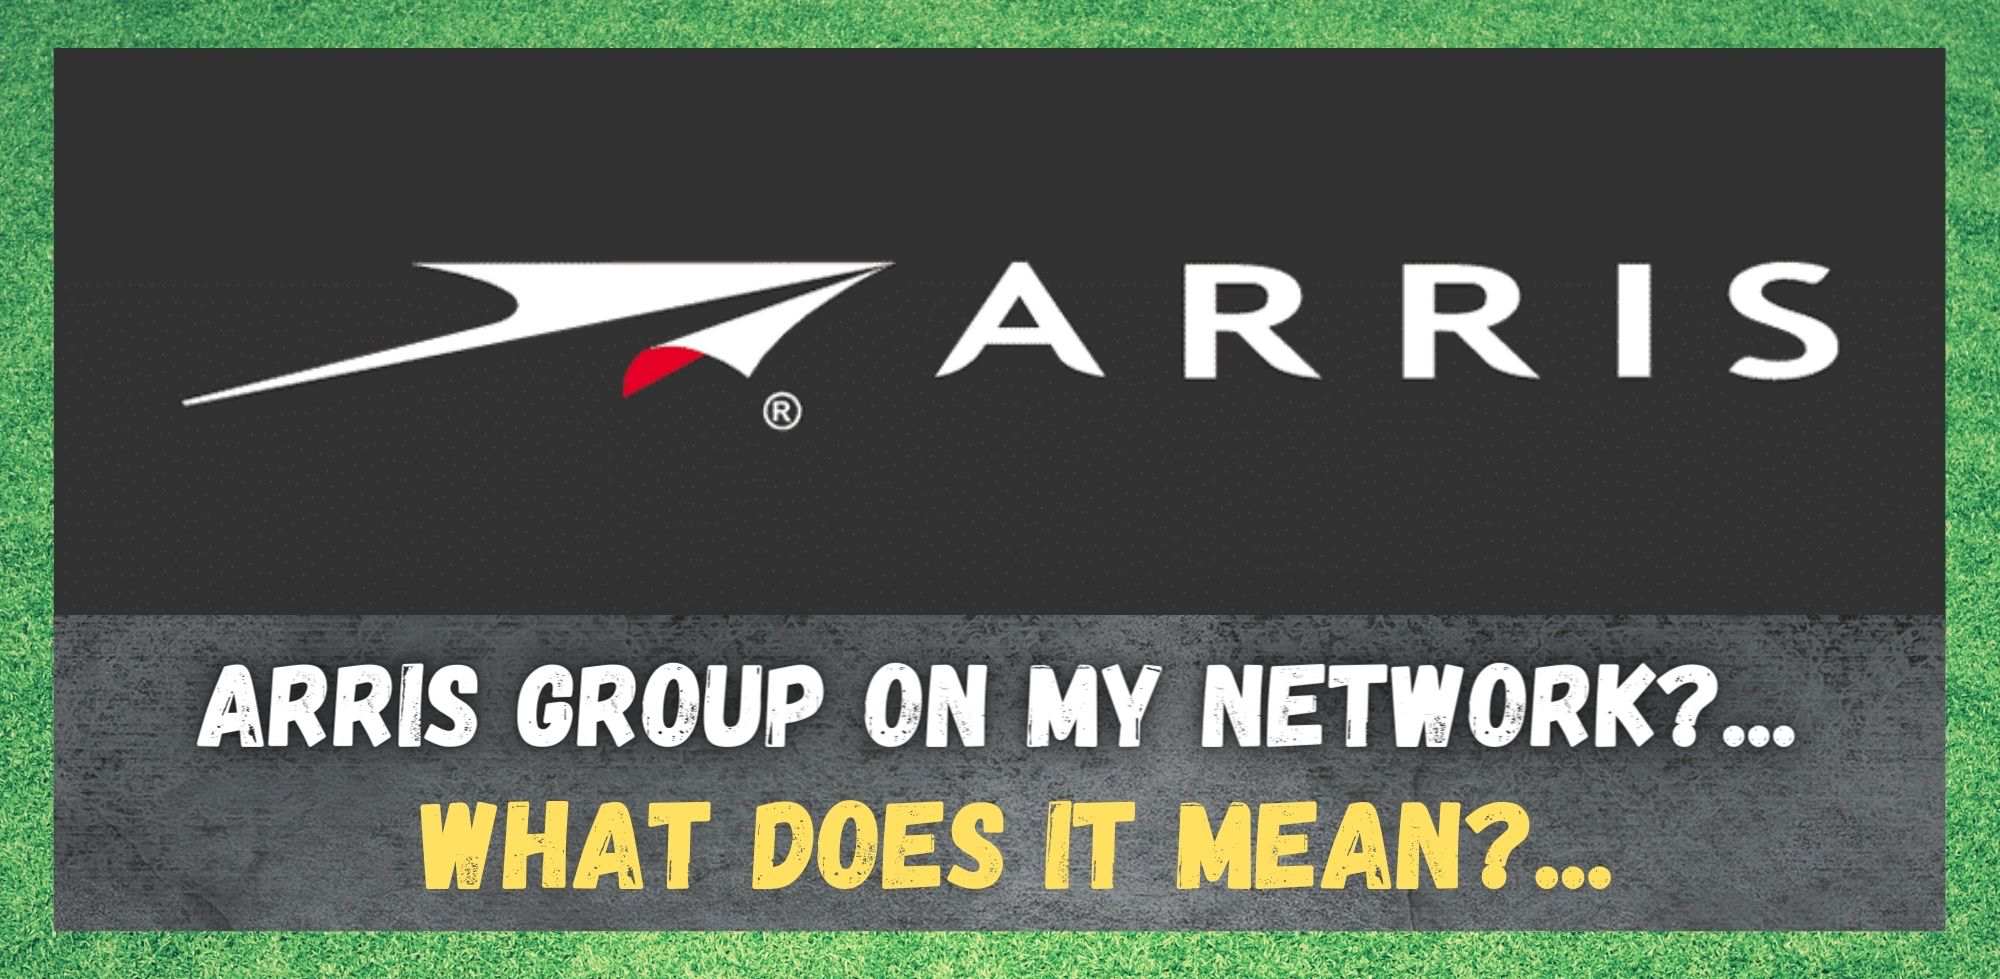 Arris Group บนเครือข่ายของฉัน: หมายความว่าอย่างไร